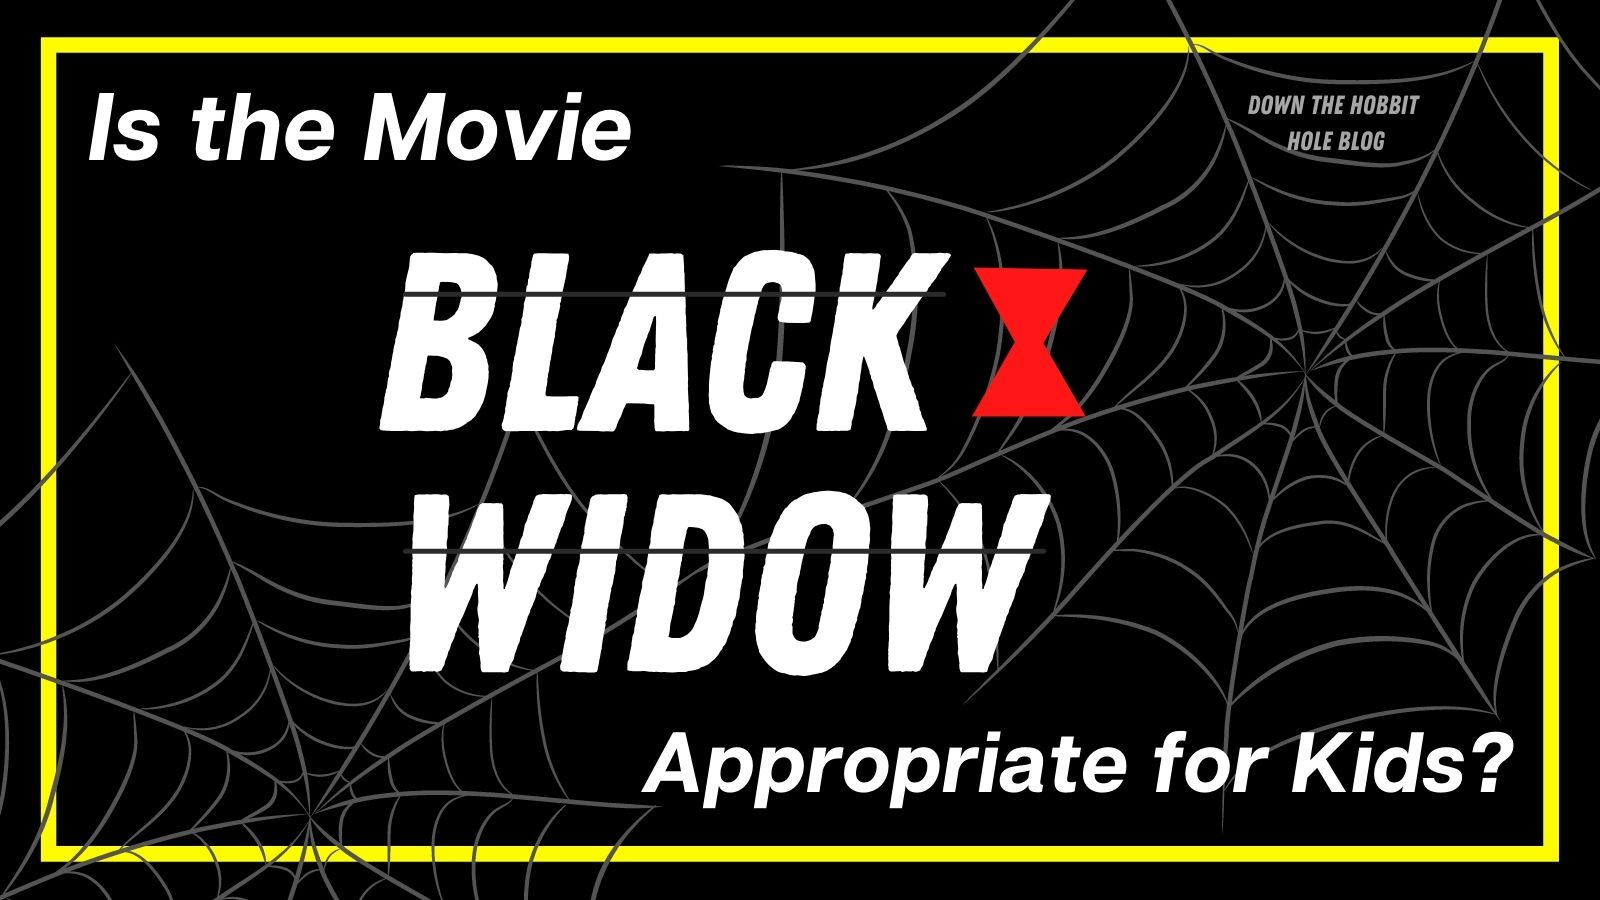 Black Widow Appropriate, Black Widow Parent Review